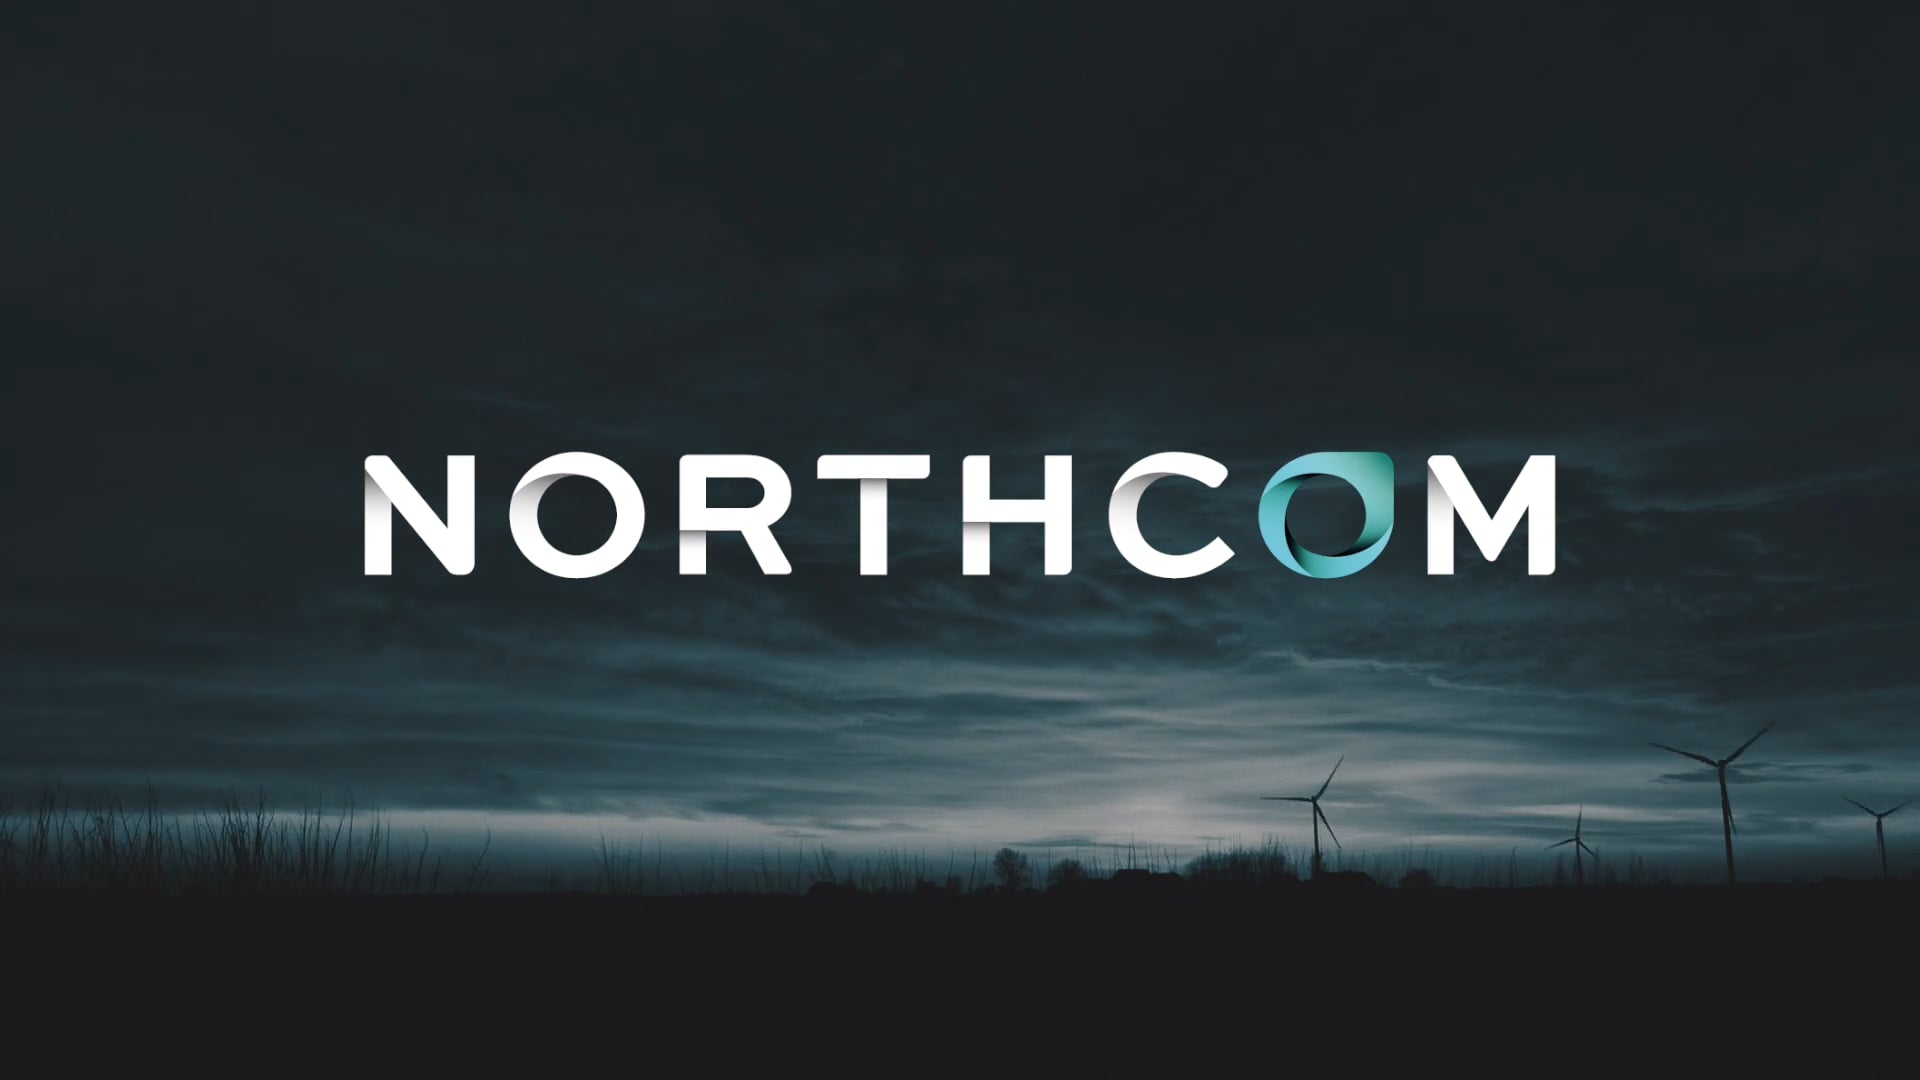 Northcom - When communication matters